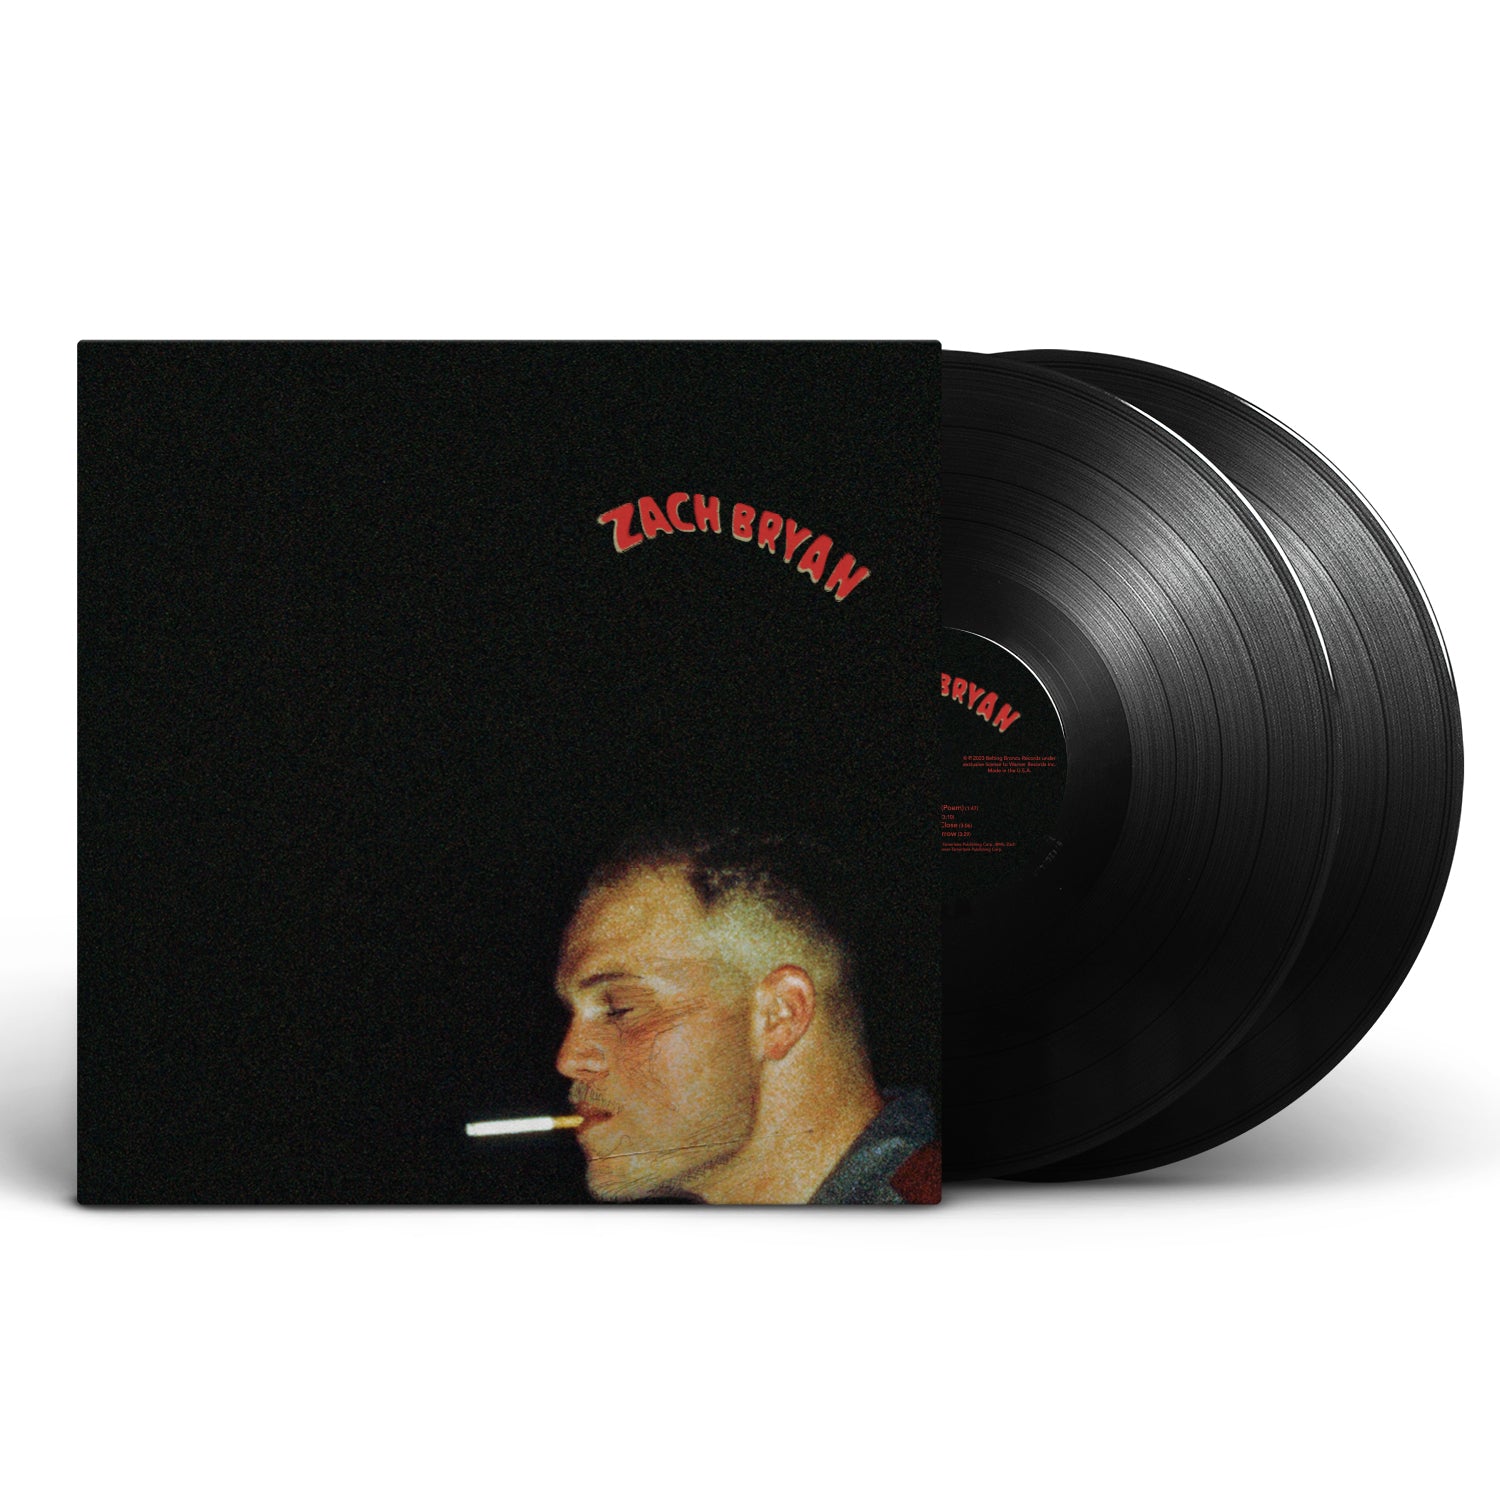 Zach Bryan Self Titled 2 LP Vinyl Records